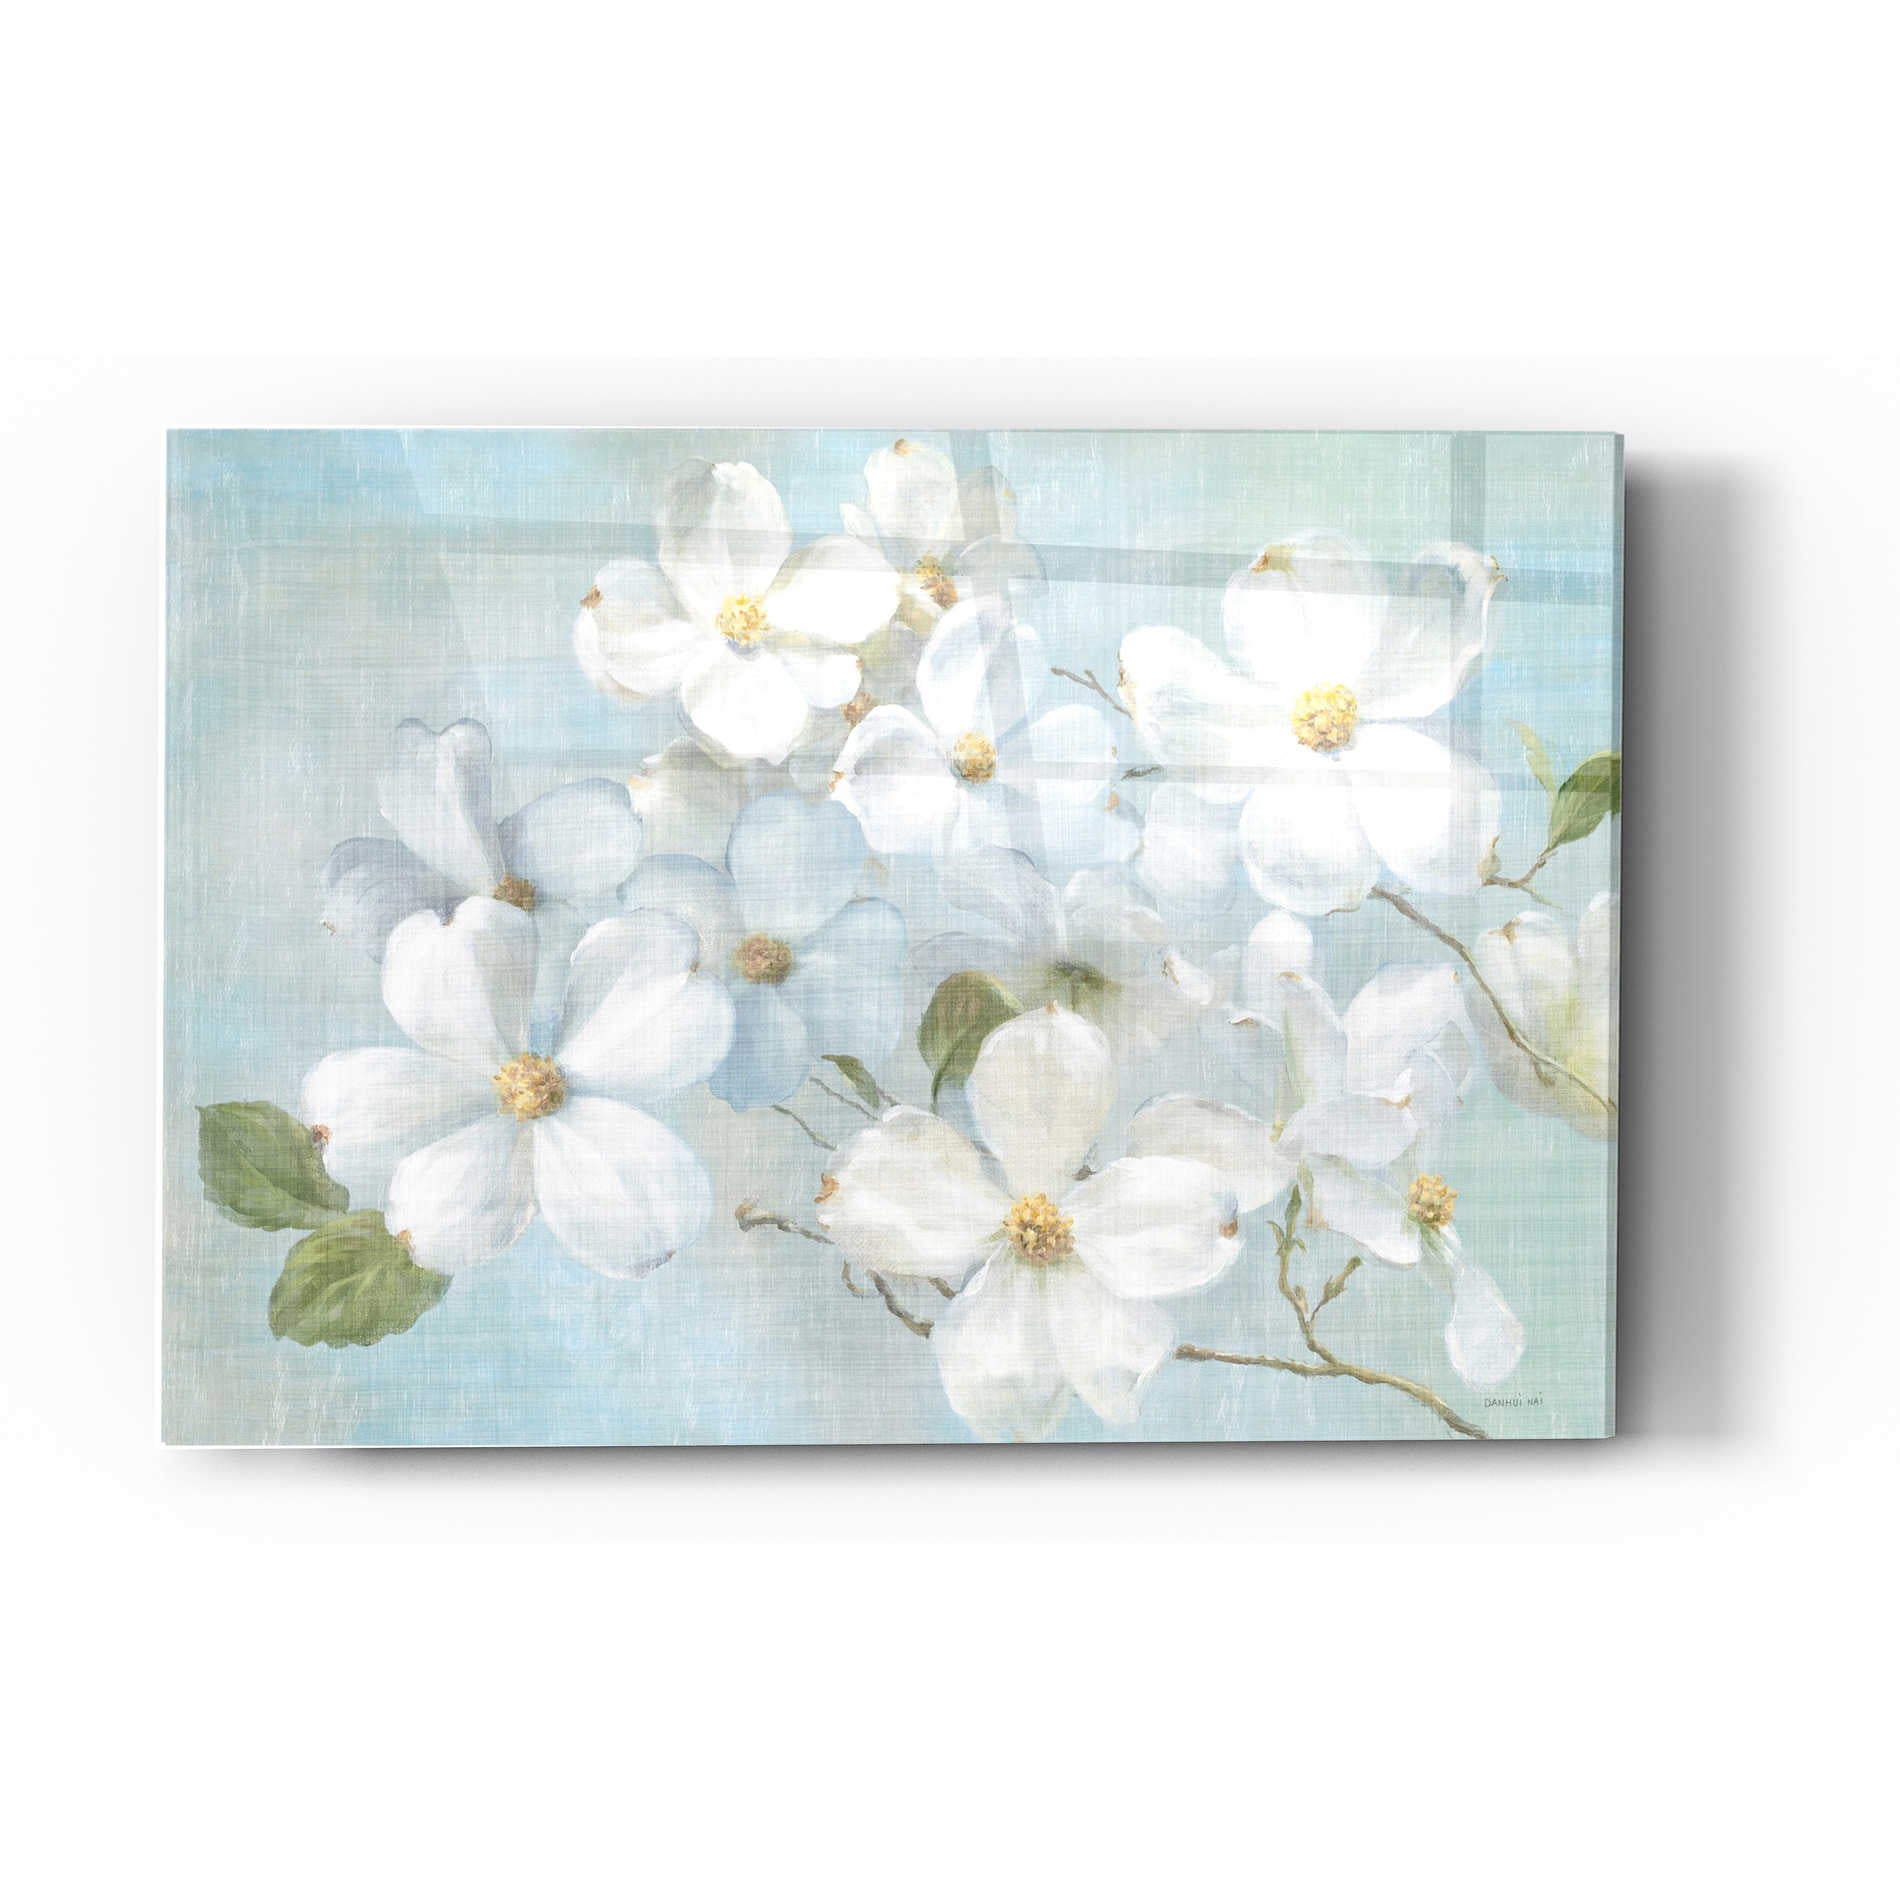 Epic Art 'Indiness Blossoms Light' by Danhui Nai, Acrylic Glass Wall Art,16x24